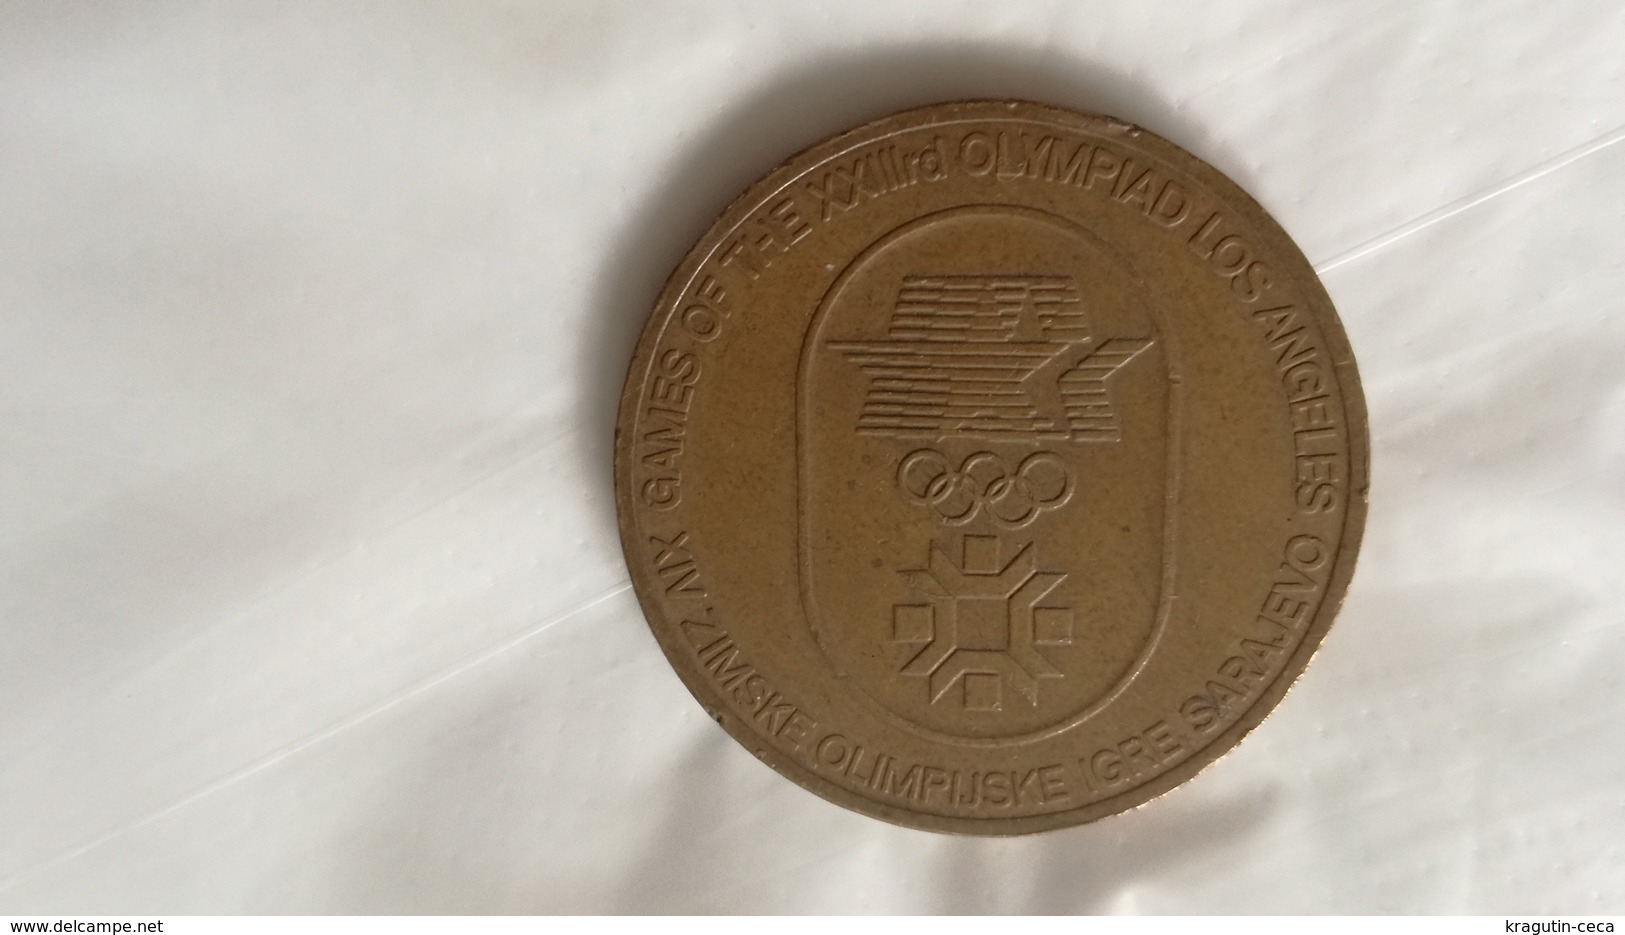 1984 OLYMPIC GAMES Coin XXIII Olympiad LOS ANGELES SARAJEVO Coin Medal Münze Medaille Pièce De Monnaie OLYMPIADE - Uniformes Recordatorios & Misc